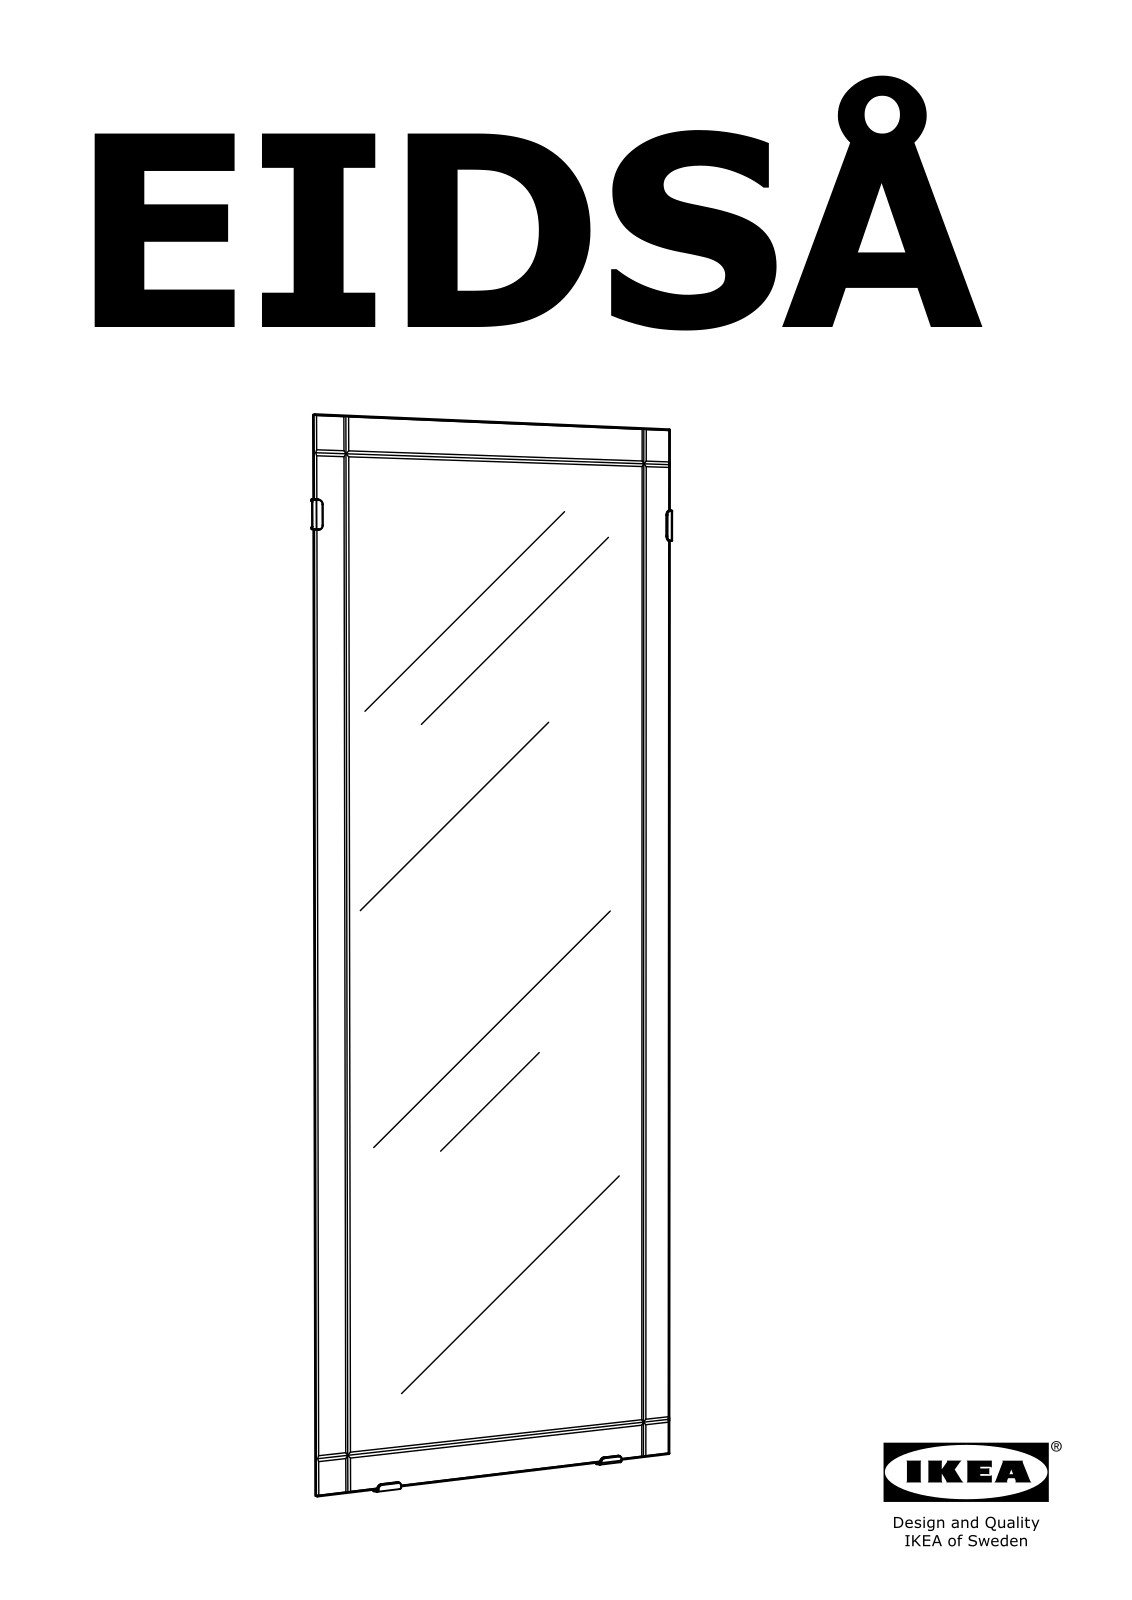 IKEA EIDSA User Manual